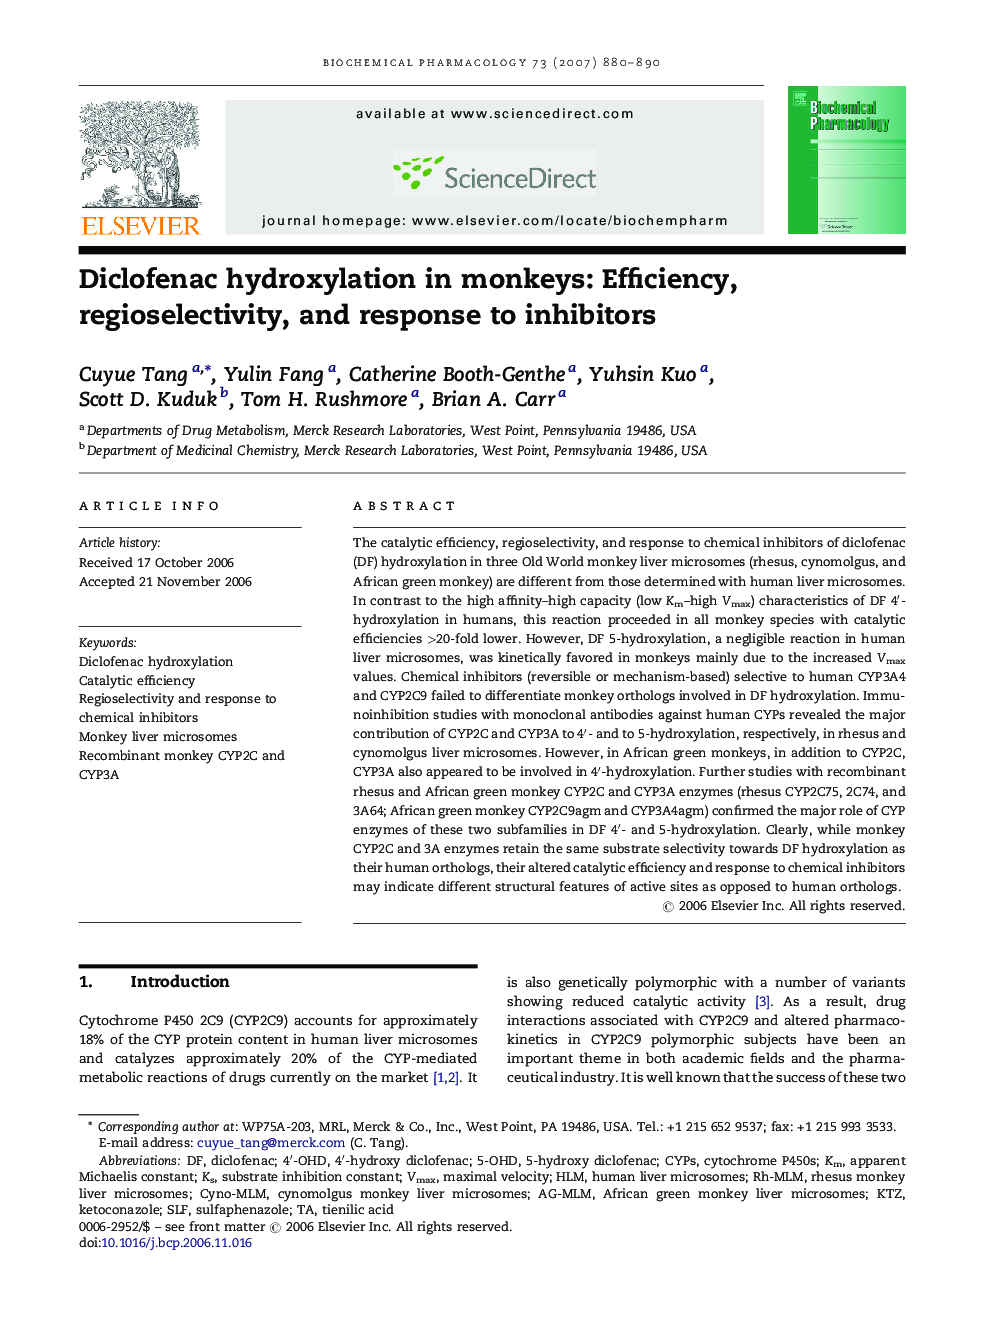 Diclofenac hydroxylation in monkeys: Efficiency, regioselectivity, and response to inhibitors